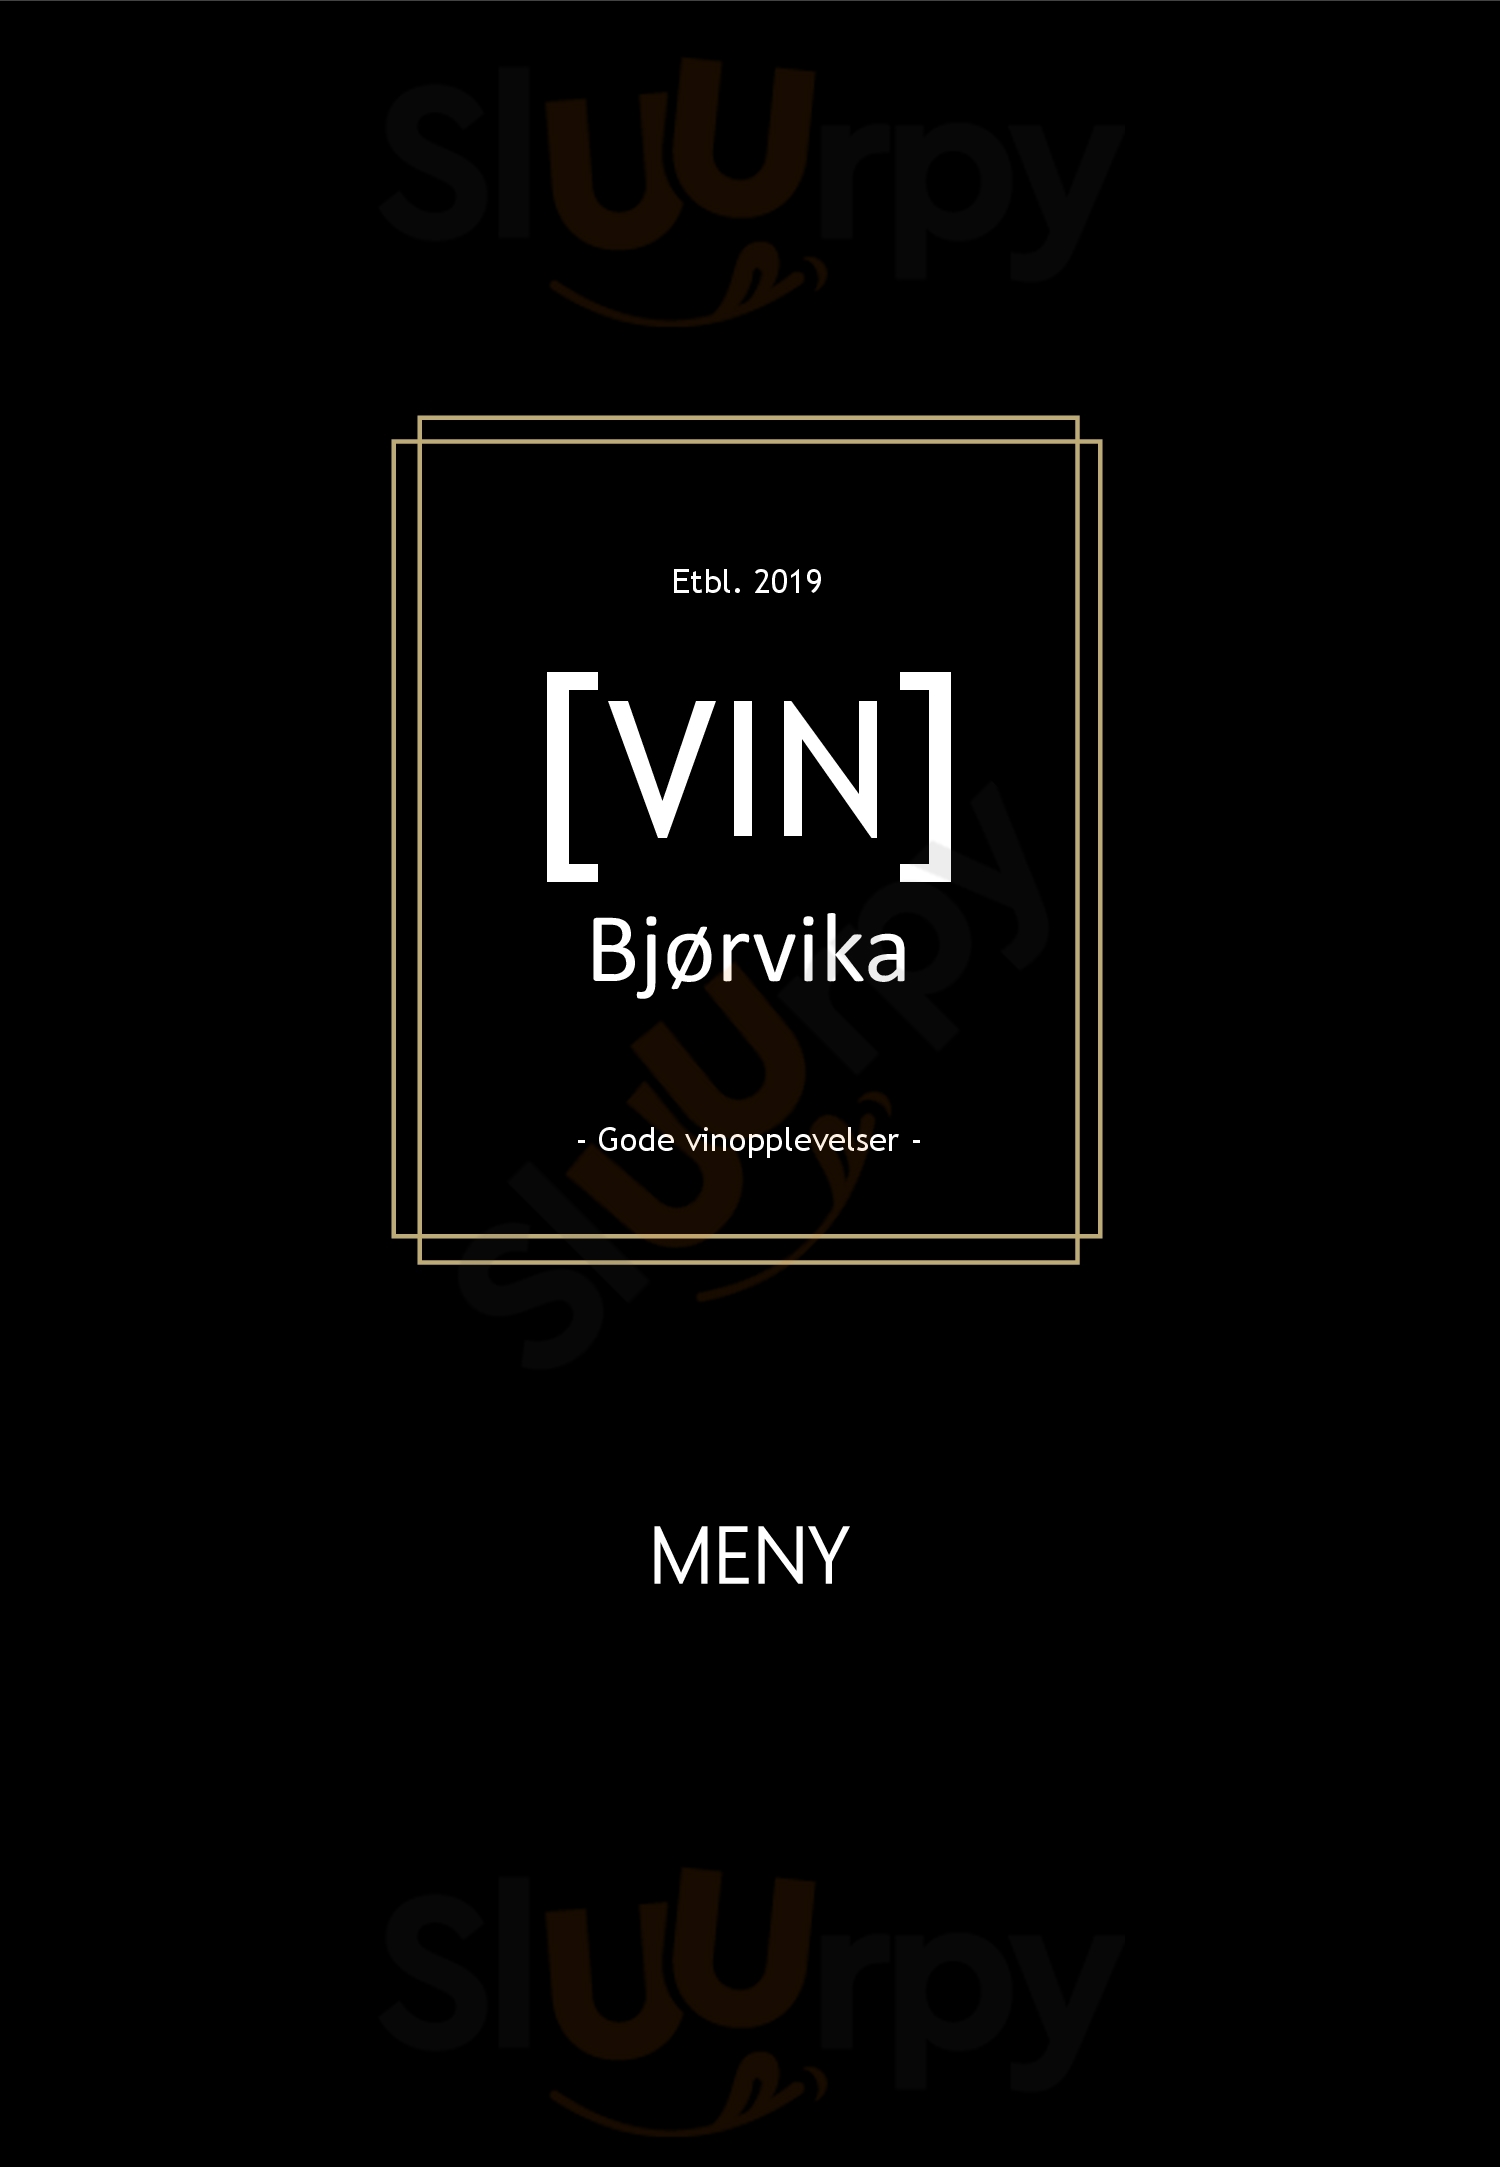 [vin] Bjørvika Oslo Menu - 1